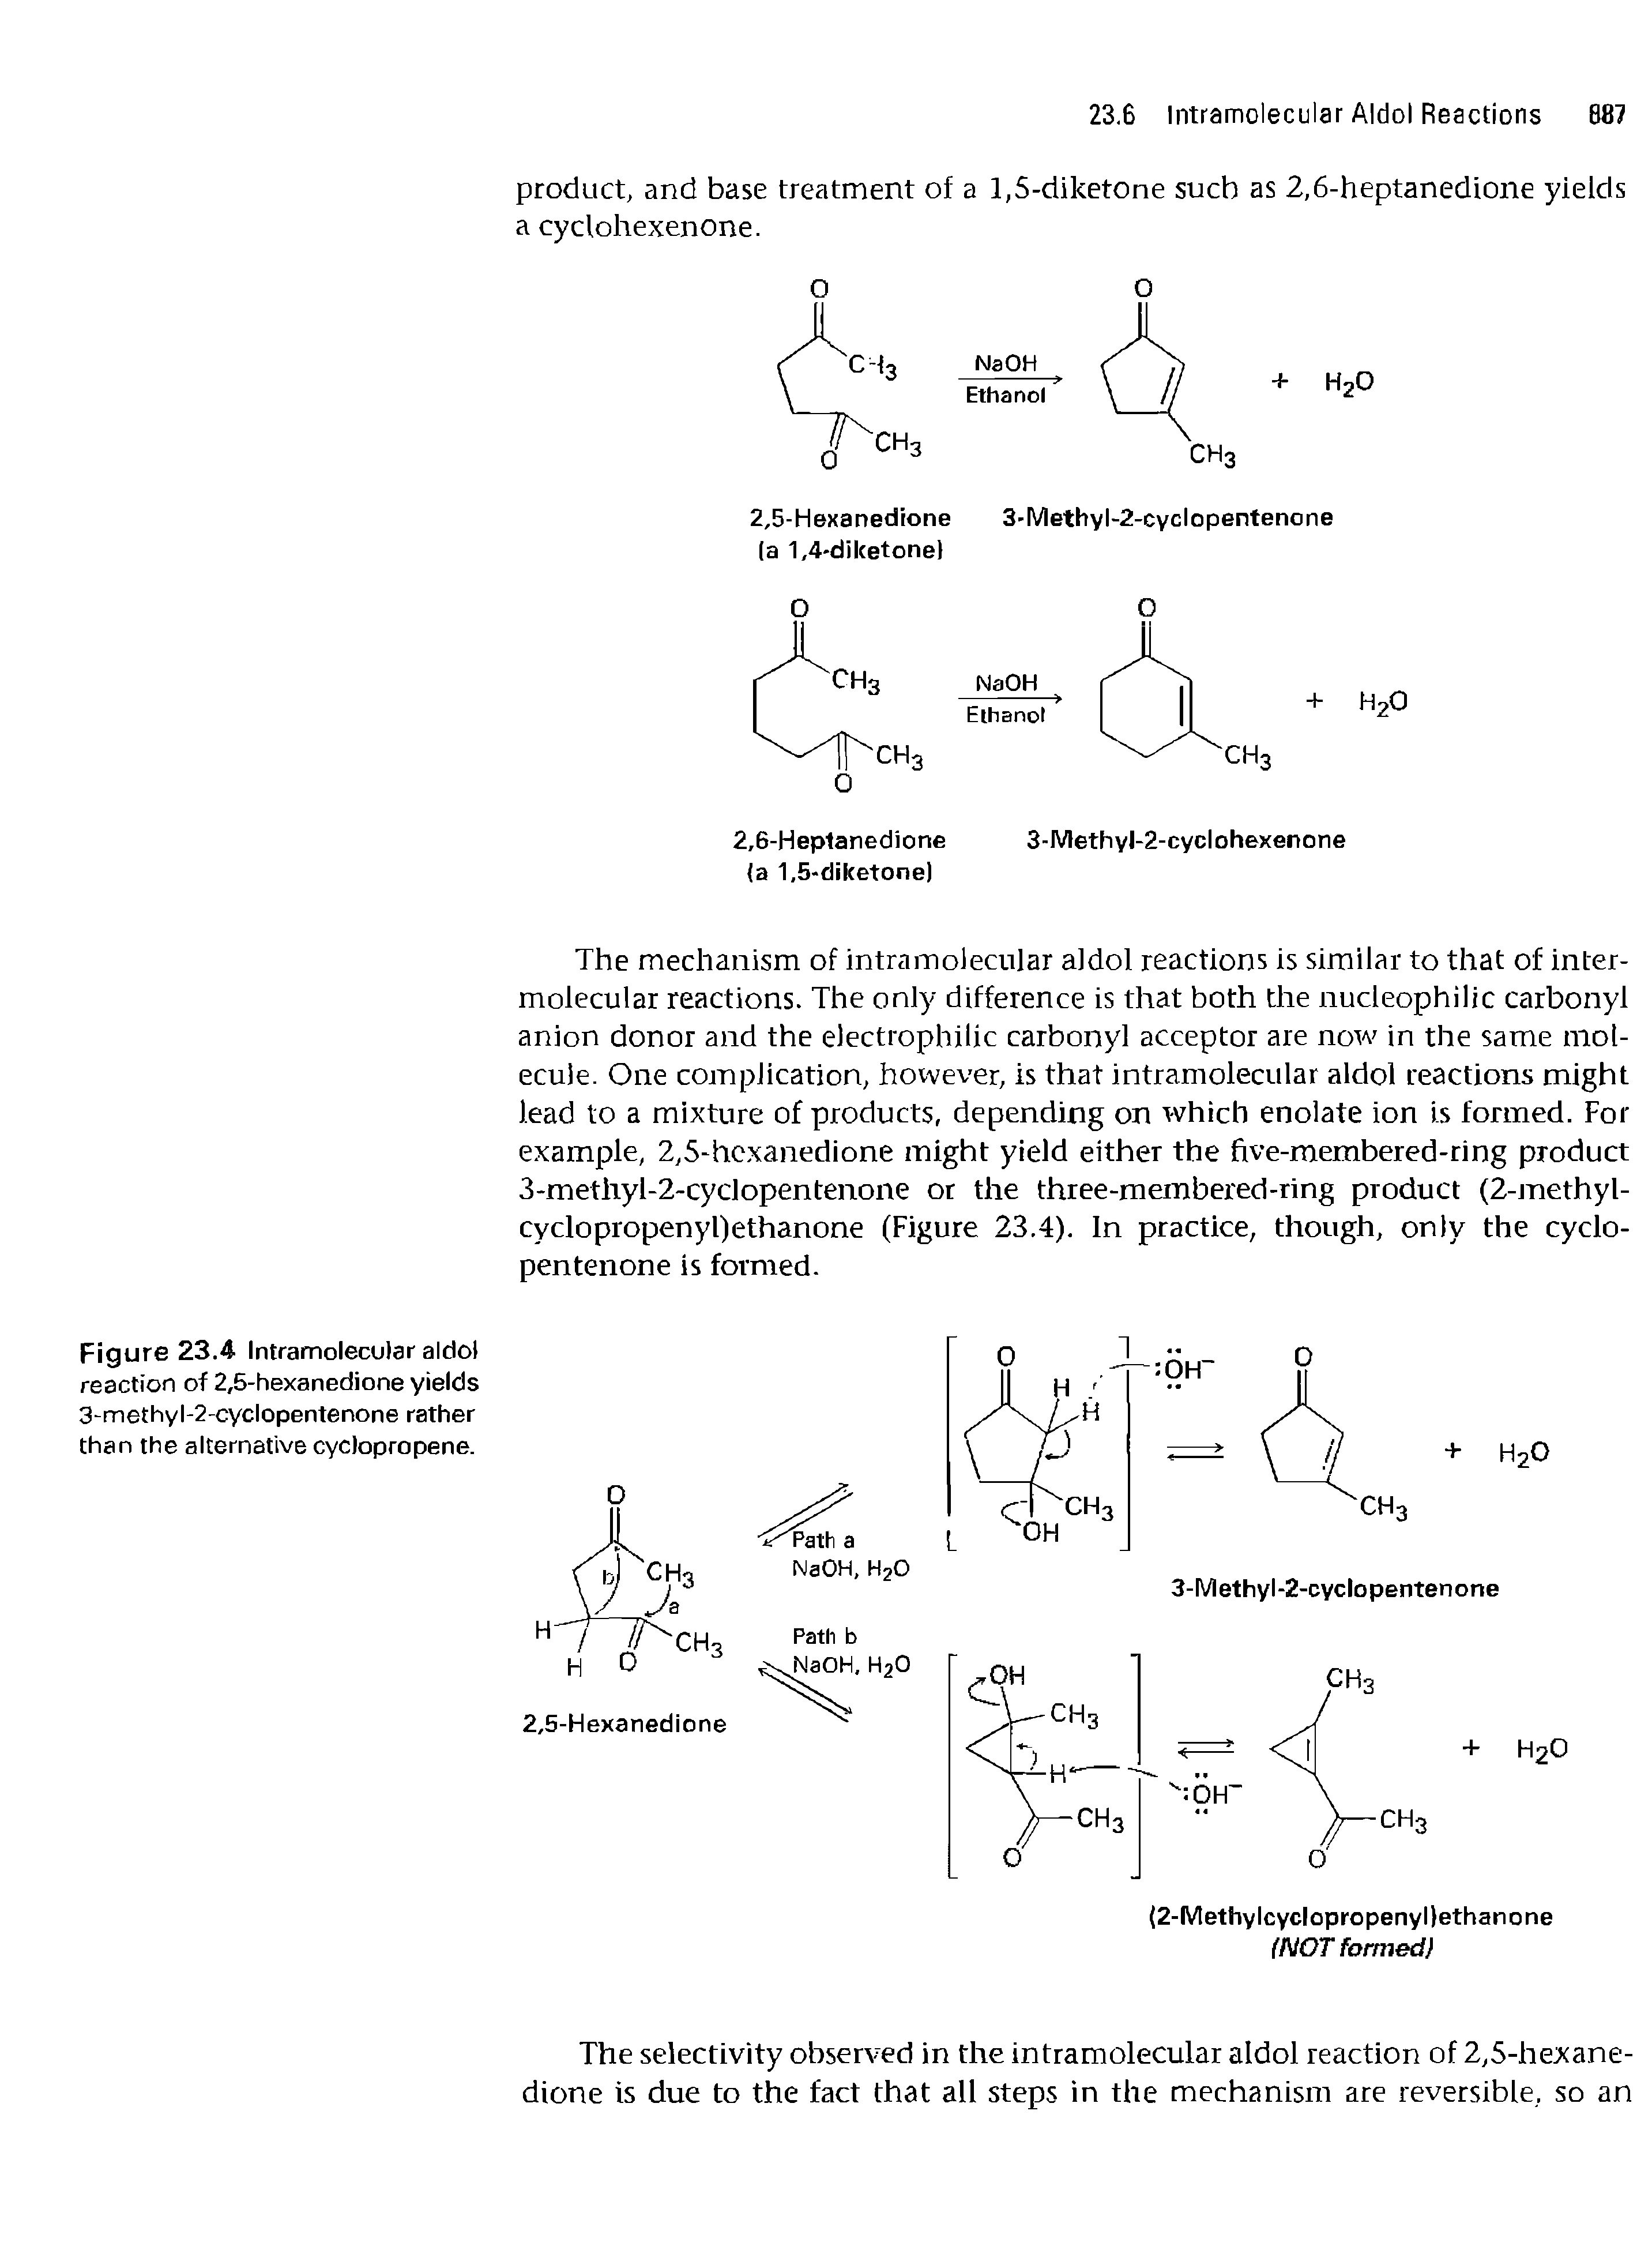 Figure 23.4 Intramolecular aldol reaction of 2,5-hexanedione yields 3-methyl-2-cyclopentenone rather than the alternative cyclopropene.